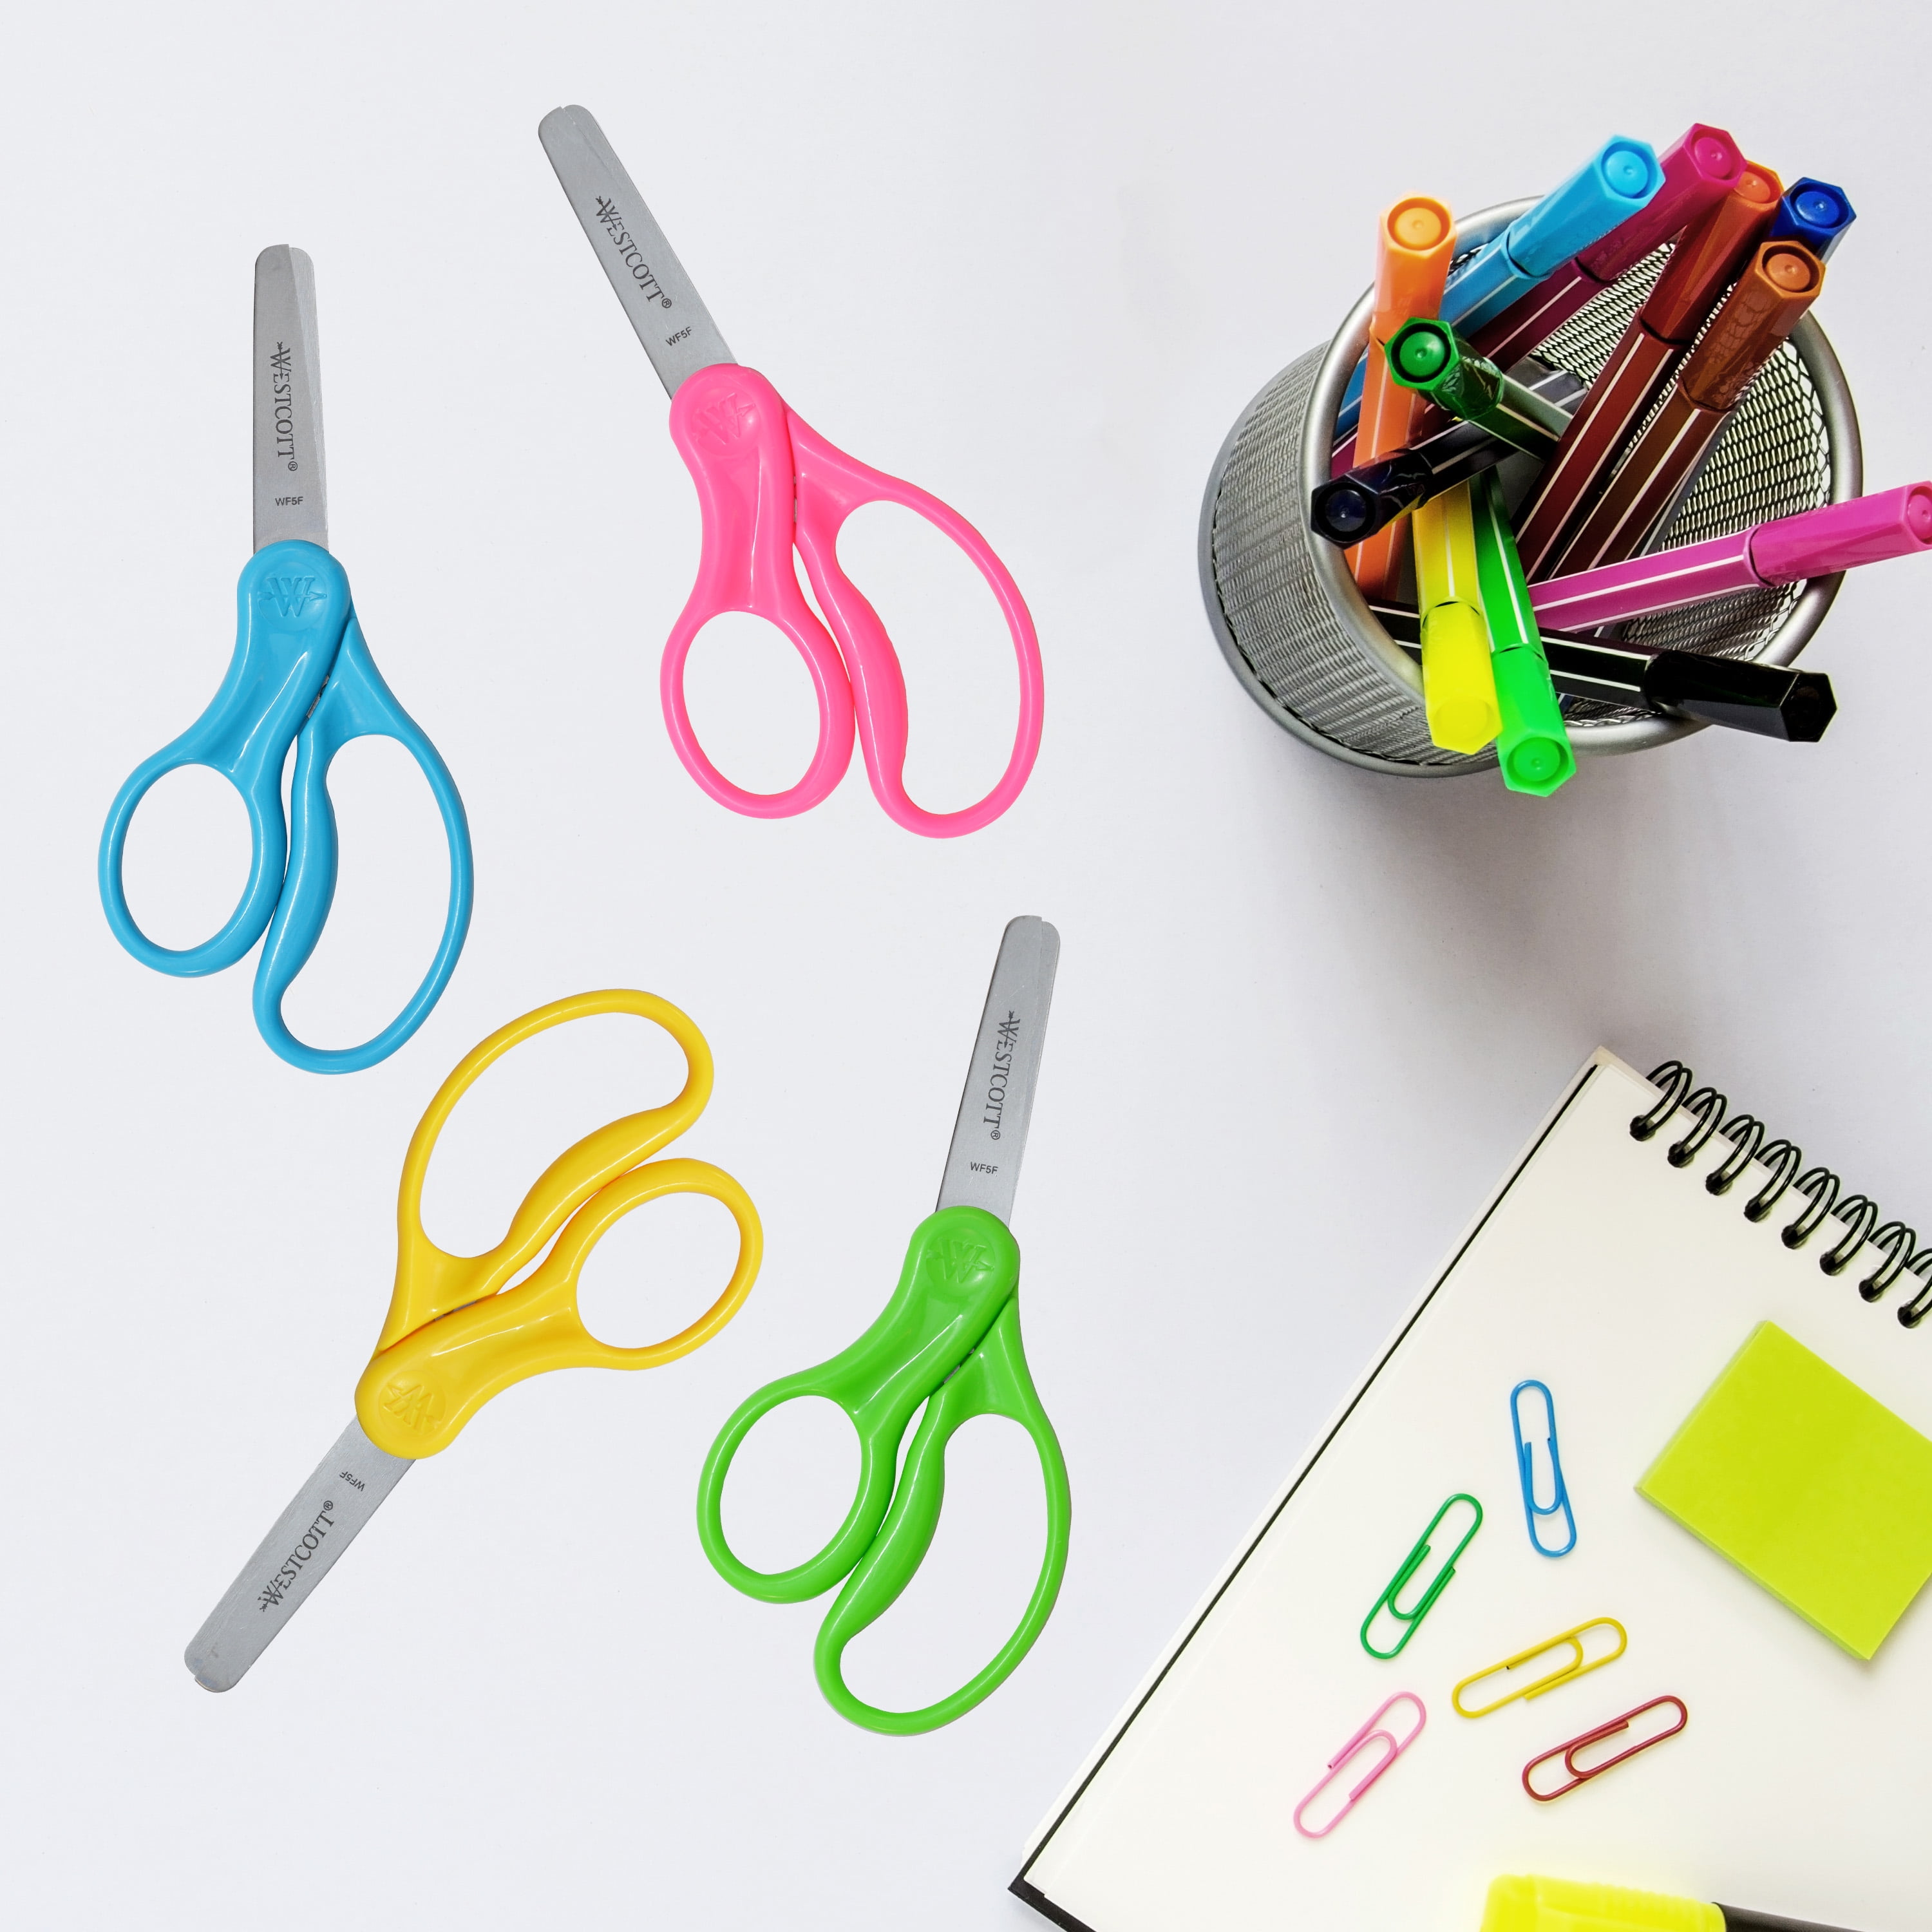  Kids Scissors, preschool 5 Inch Blunt Tip Anti-Pinch